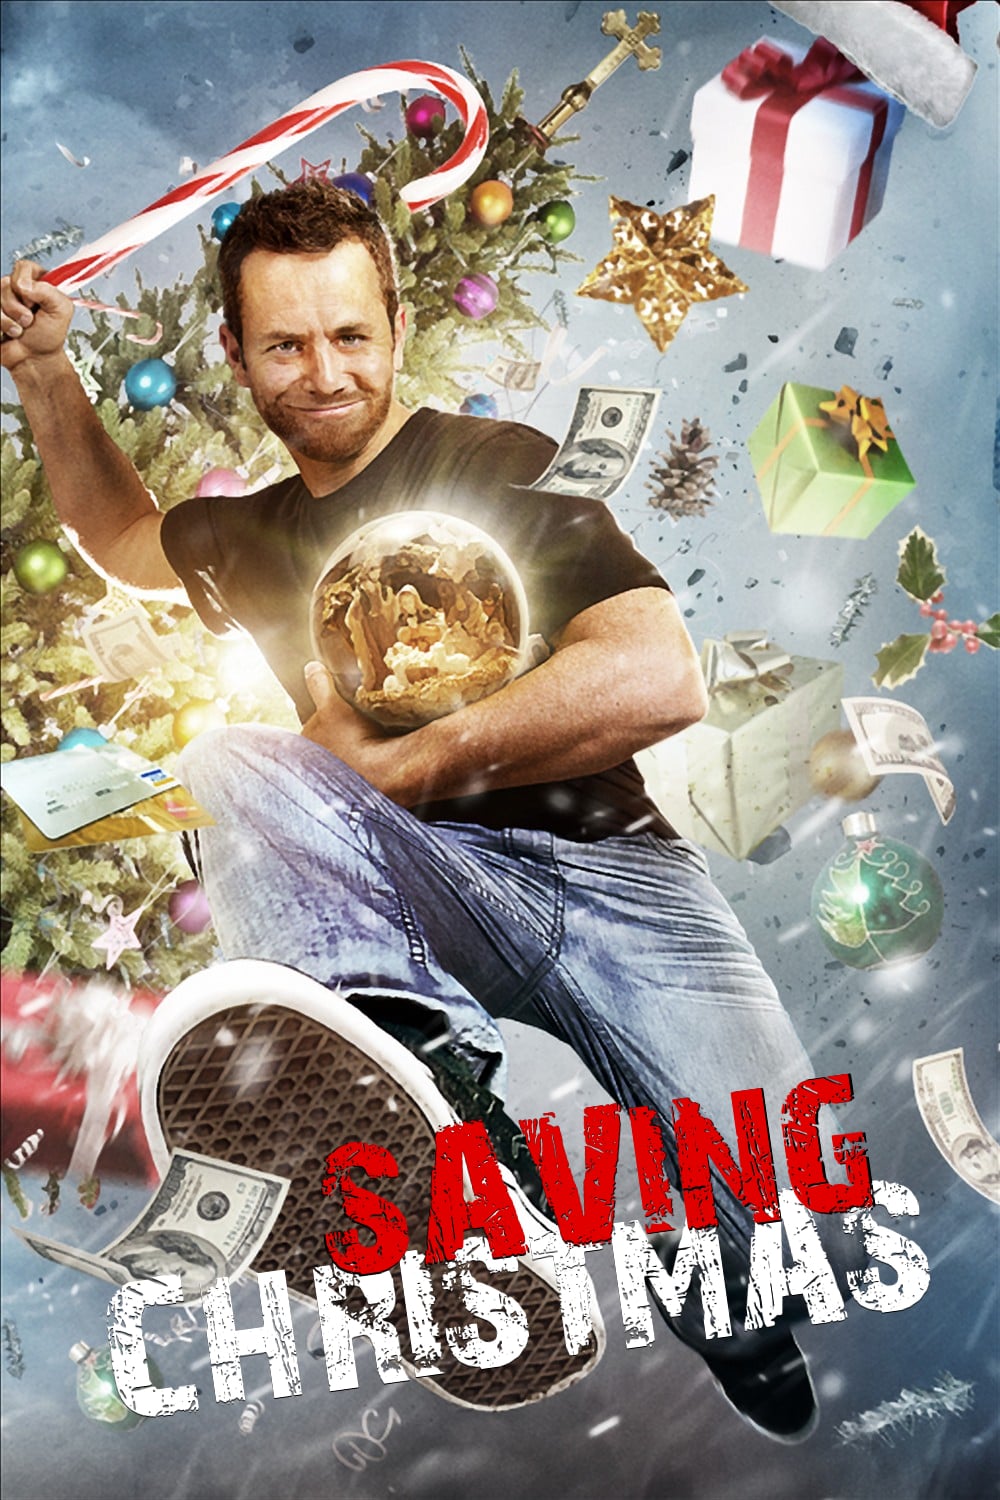 Poster for the movie "Saving Christmas"